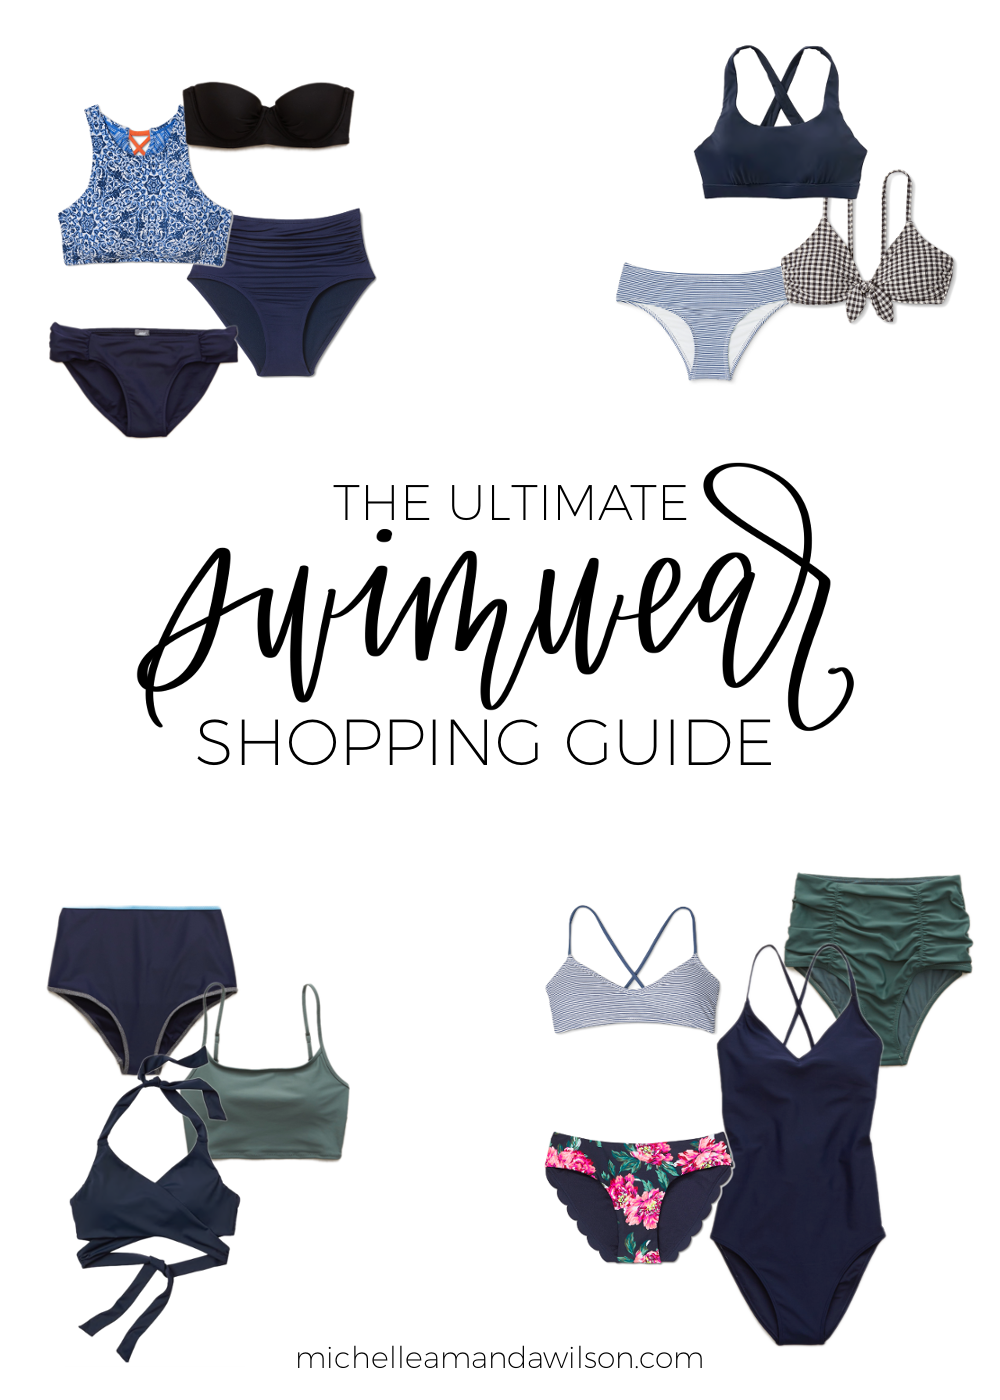 The Ultimate Swimsuit Swimwear Shopping Guide by Michelle Amanda Wilson